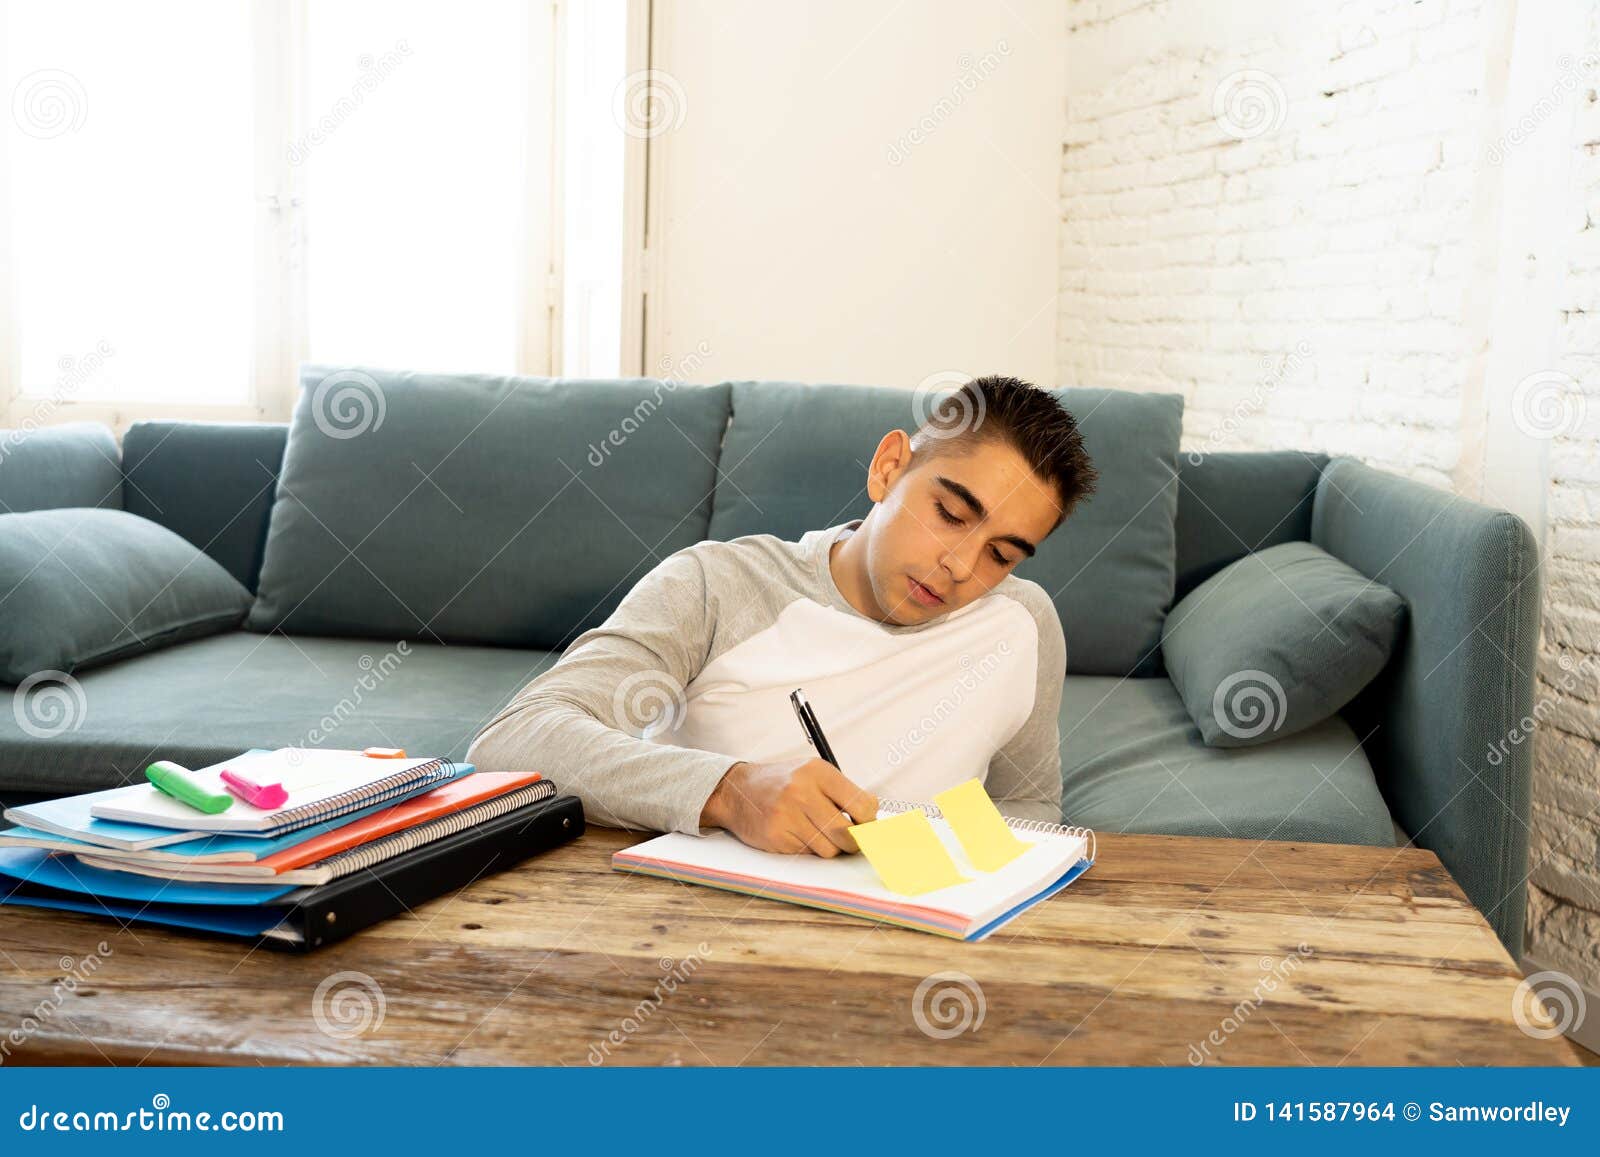 guy working on homework